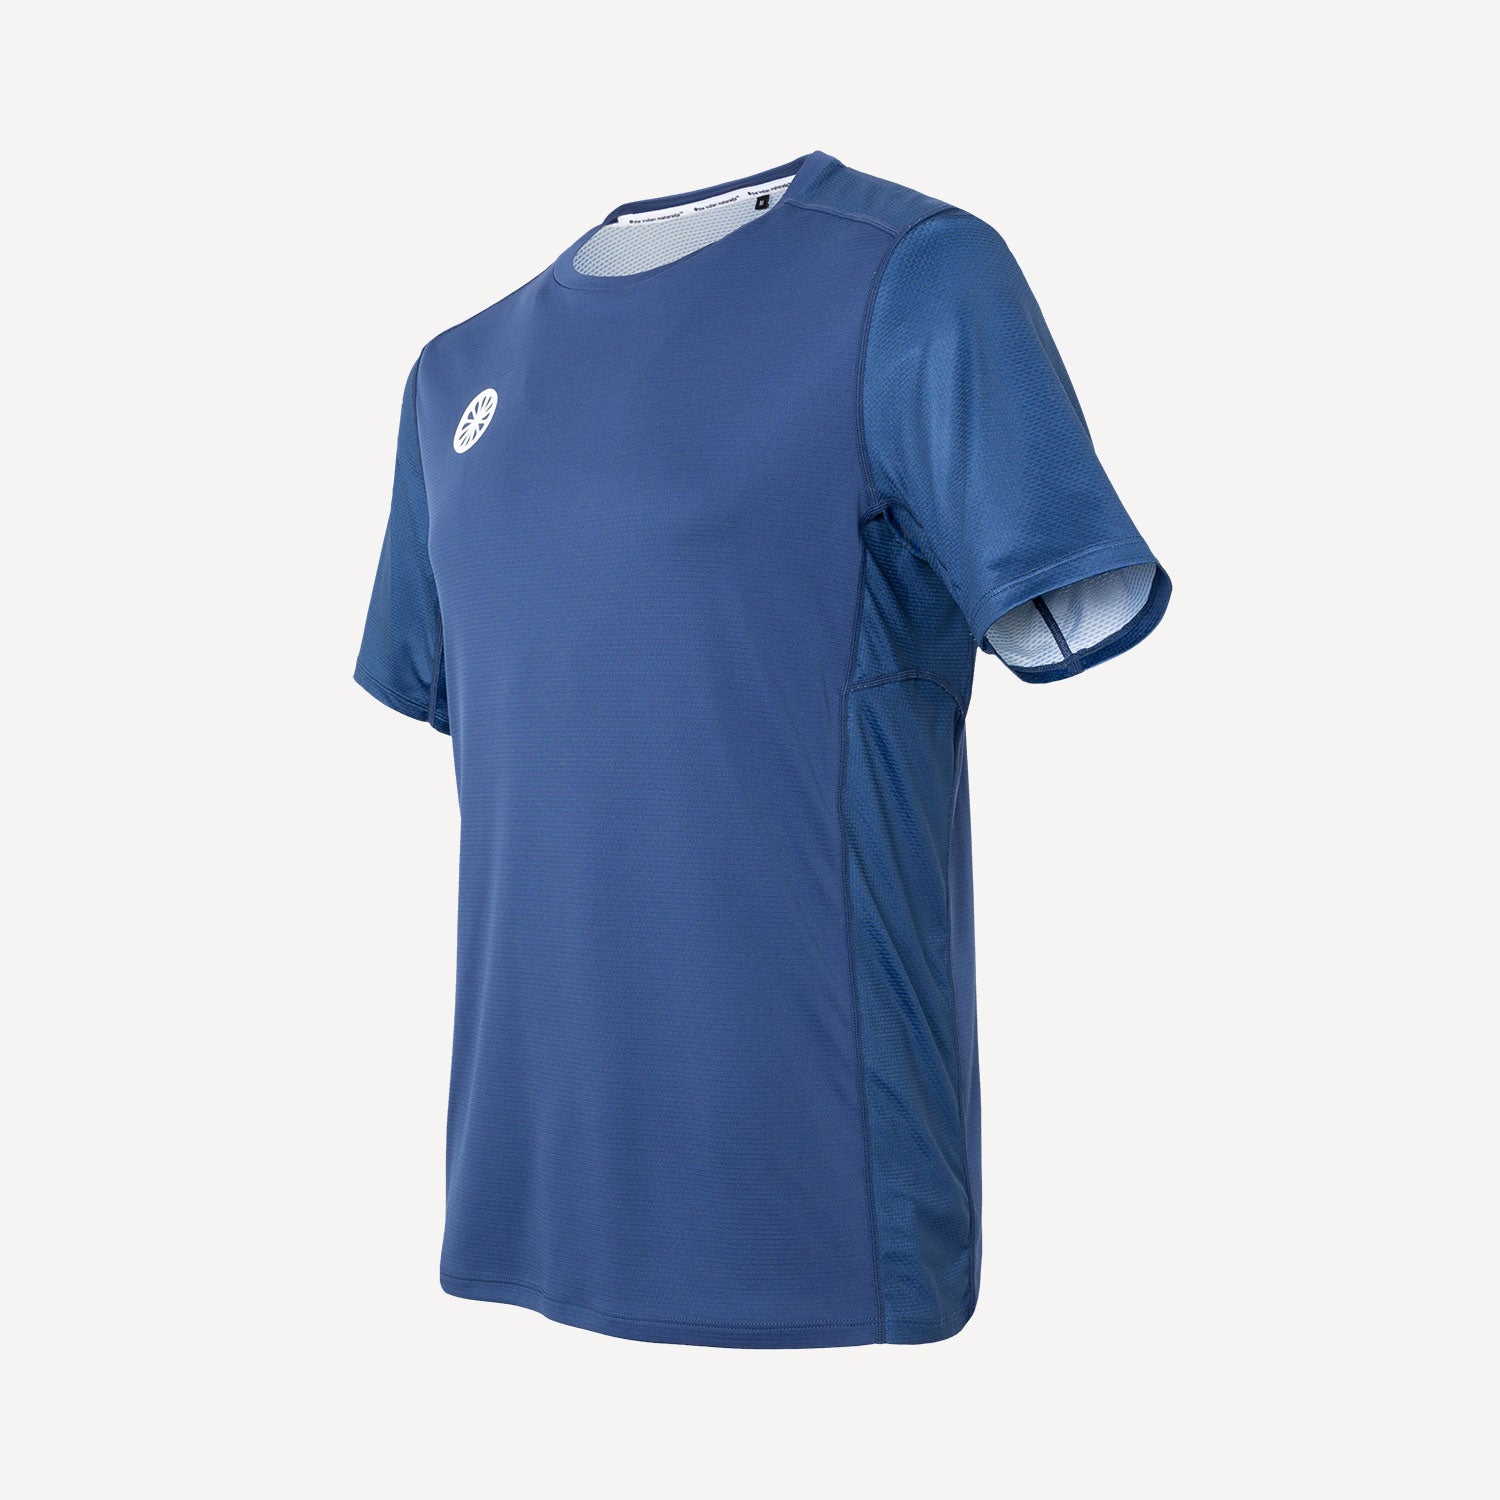 The Indian Maharadja Kadiri Men's Agility Tennis Shirt - Blue (4)